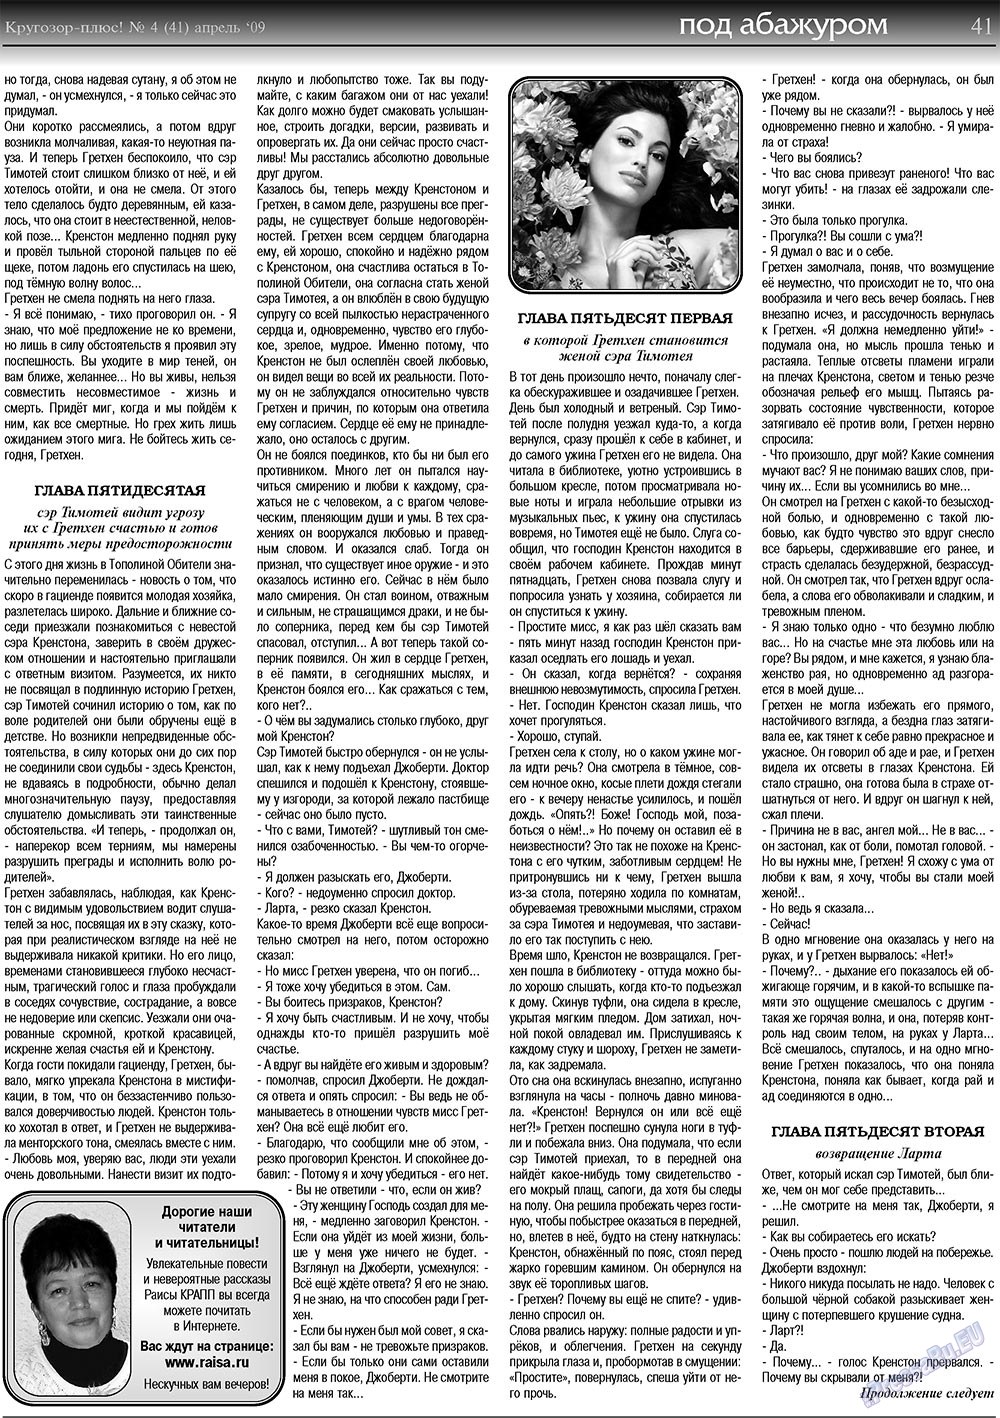 Кругозор плюс! (газета). 2009 год, номер 4, стр. 41